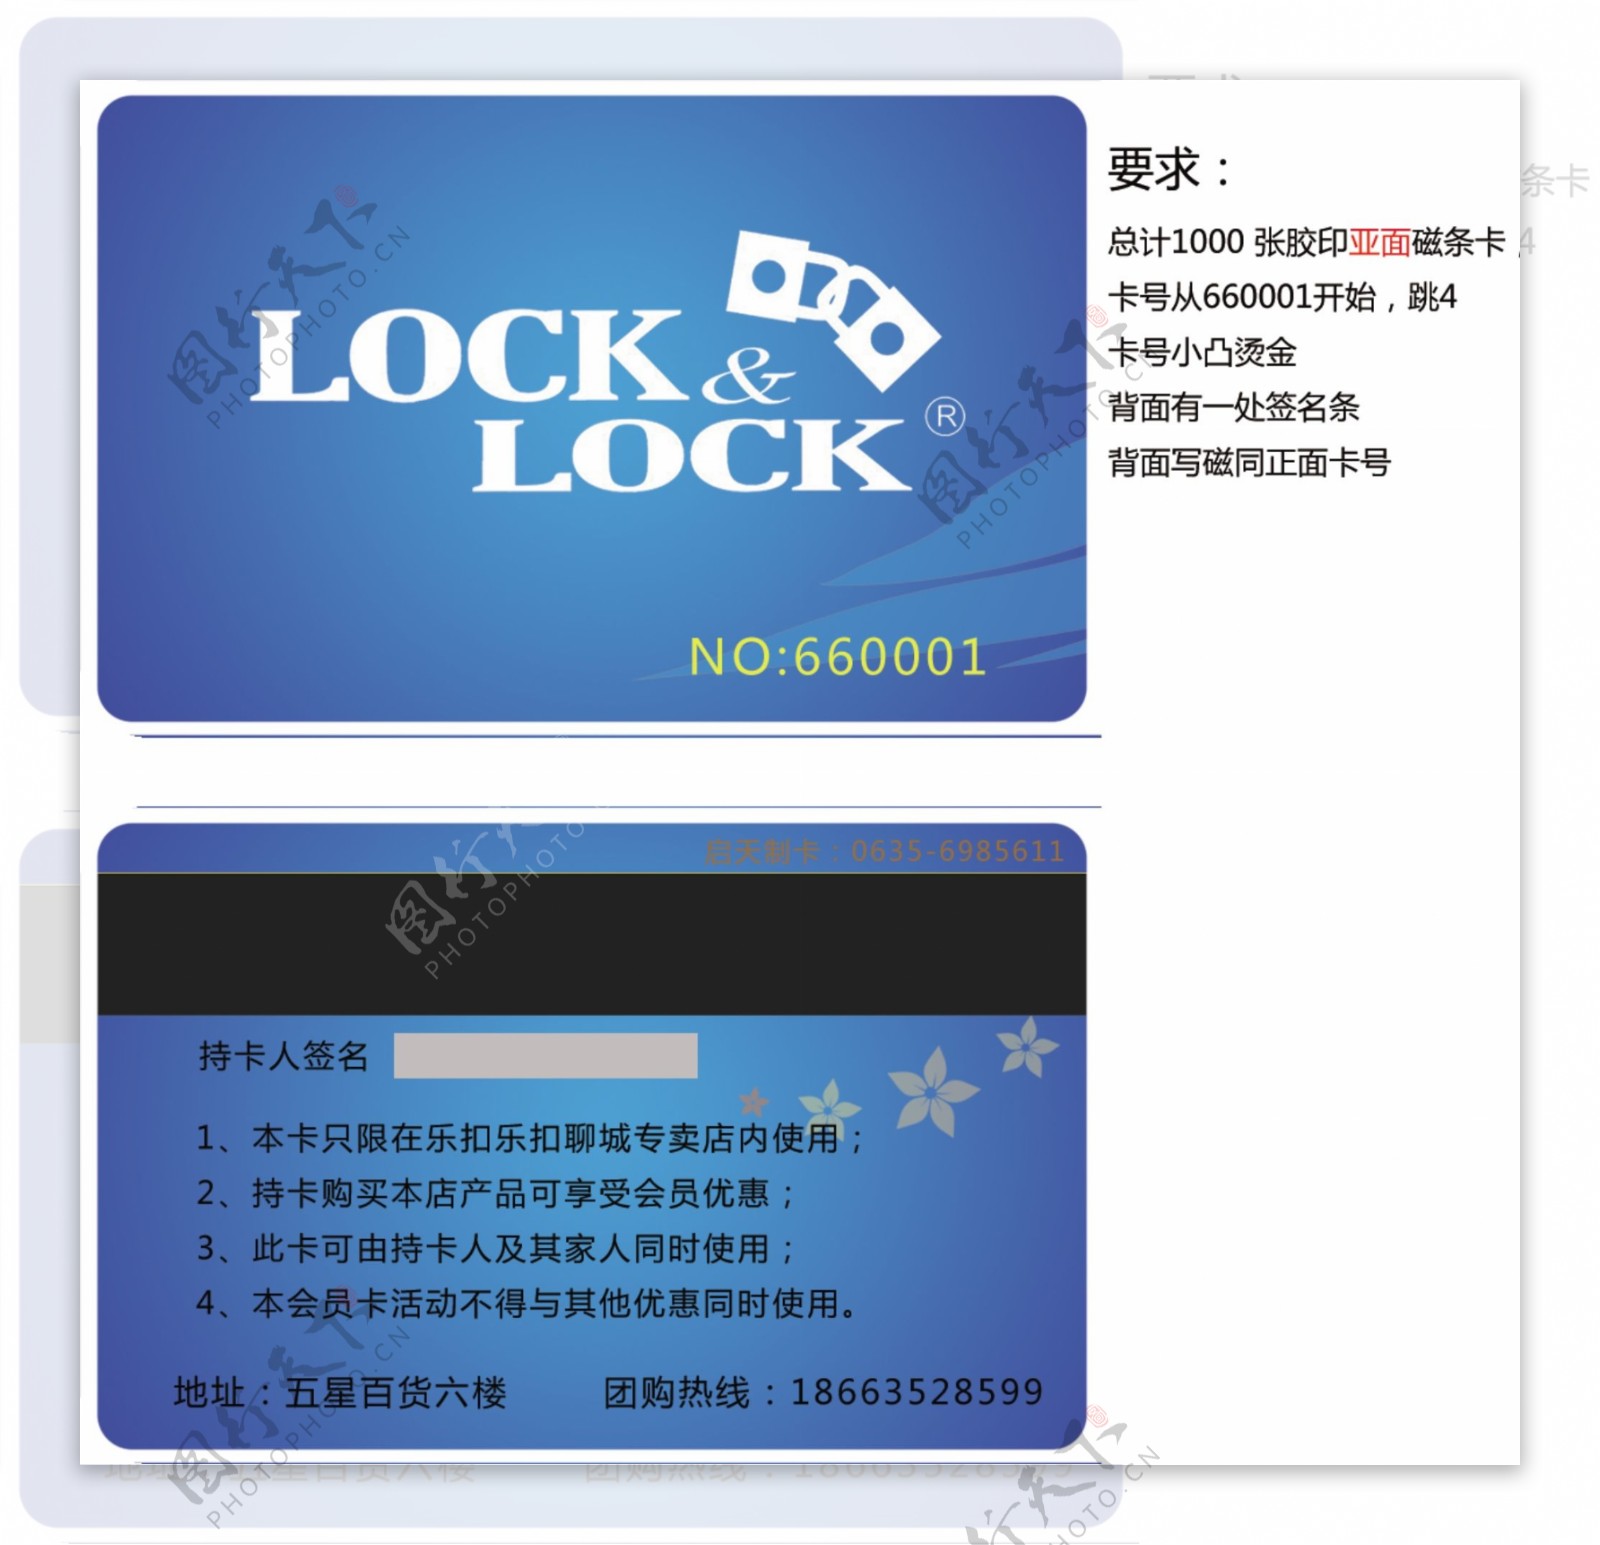 locklock蓝色贵宾卡图片